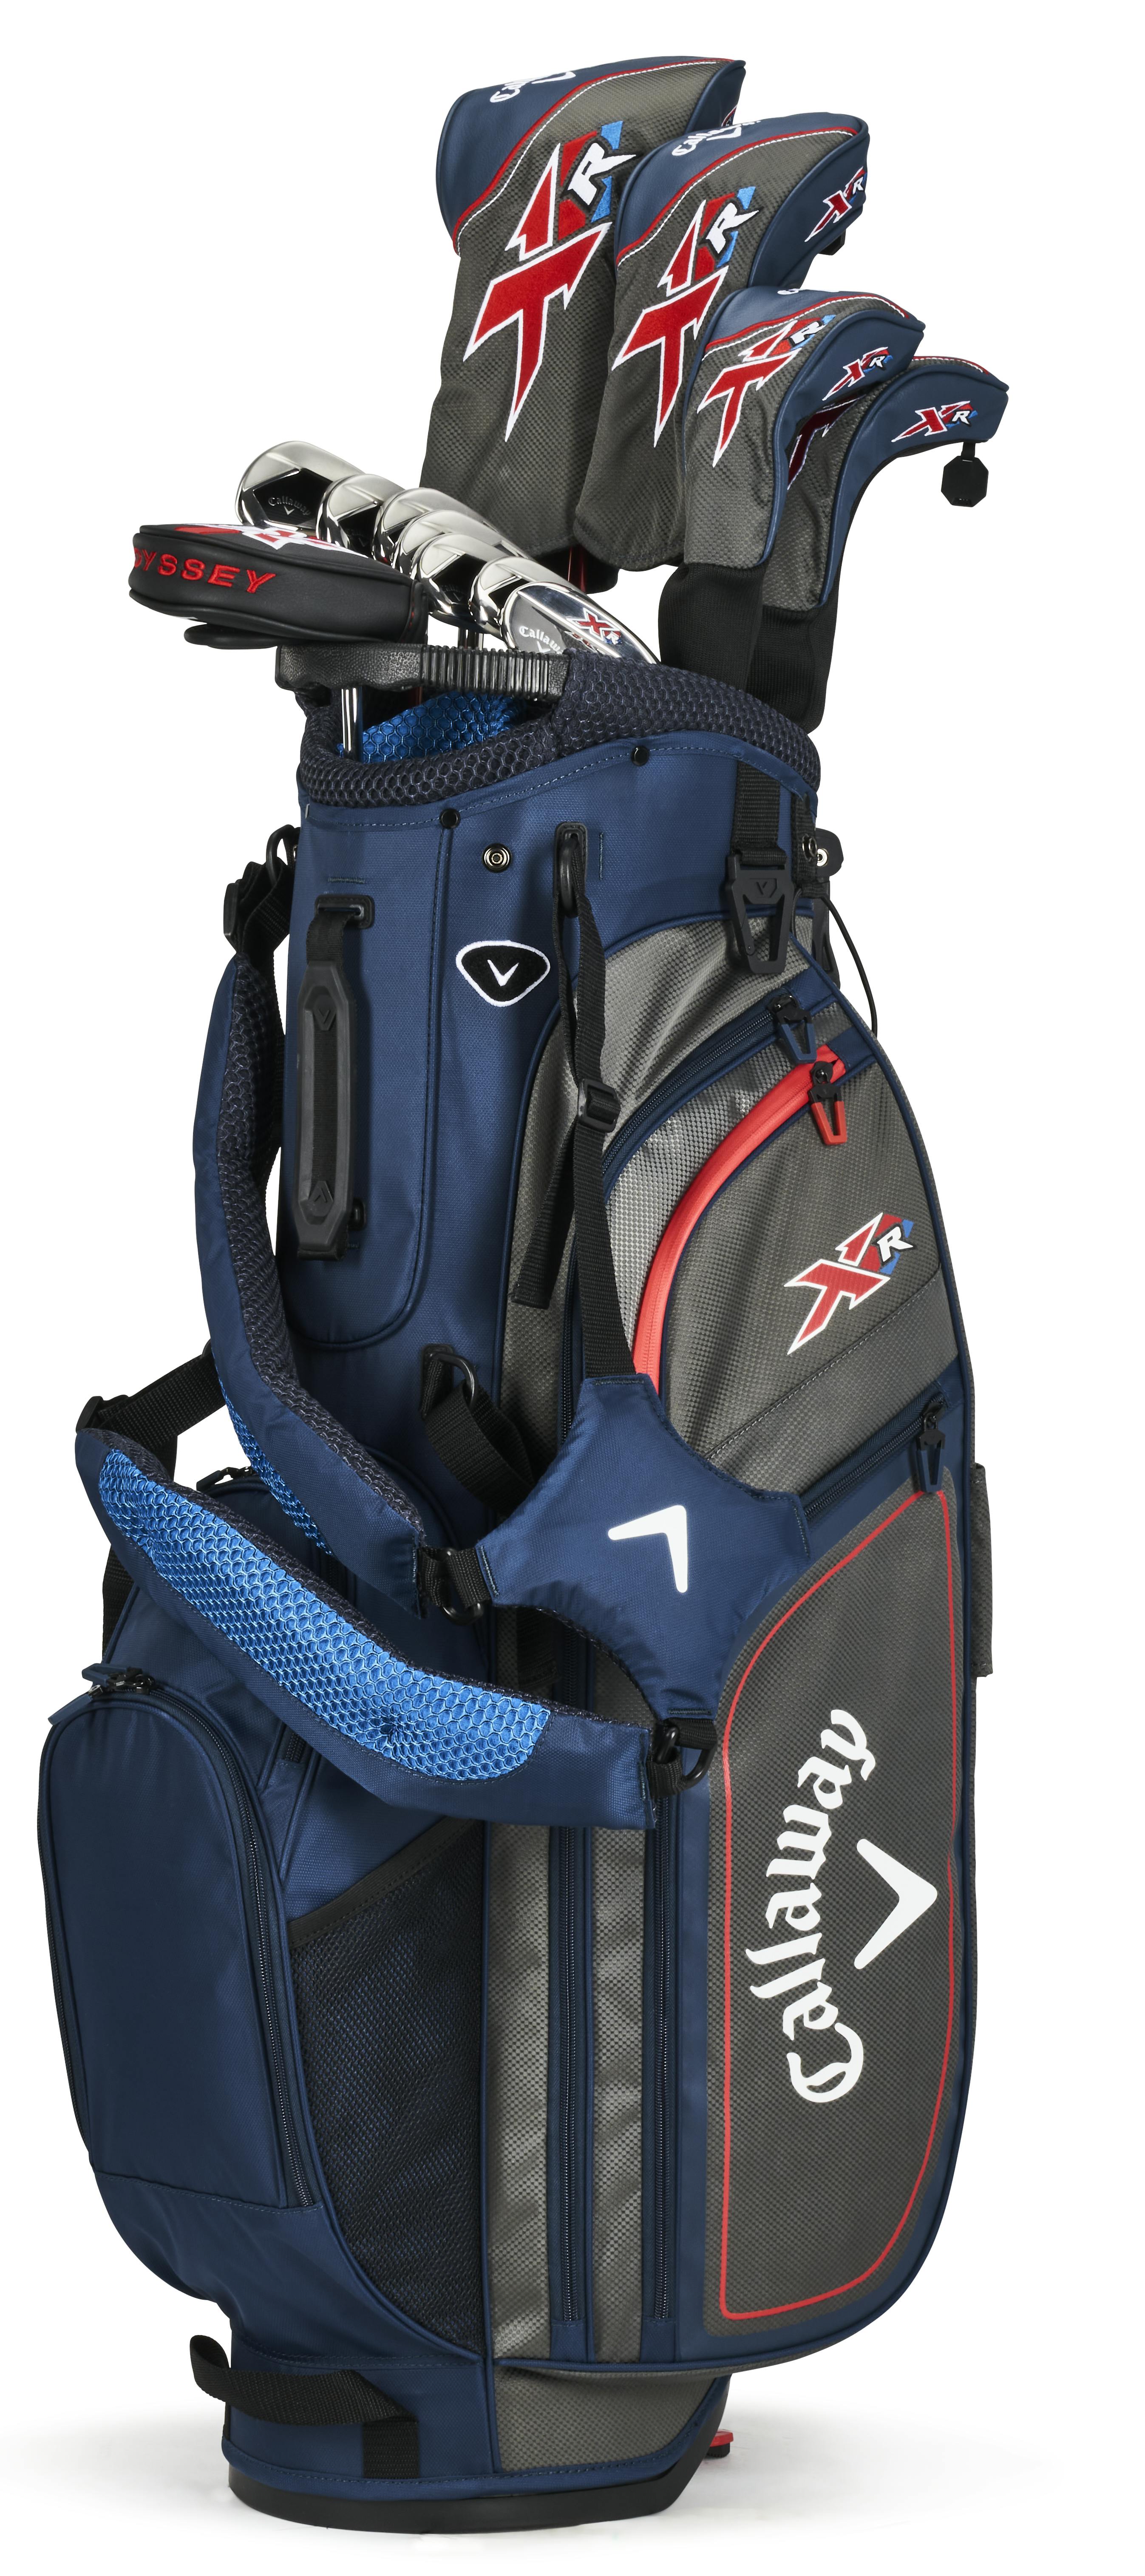 Callaway XR Packaged Complete Golf Set